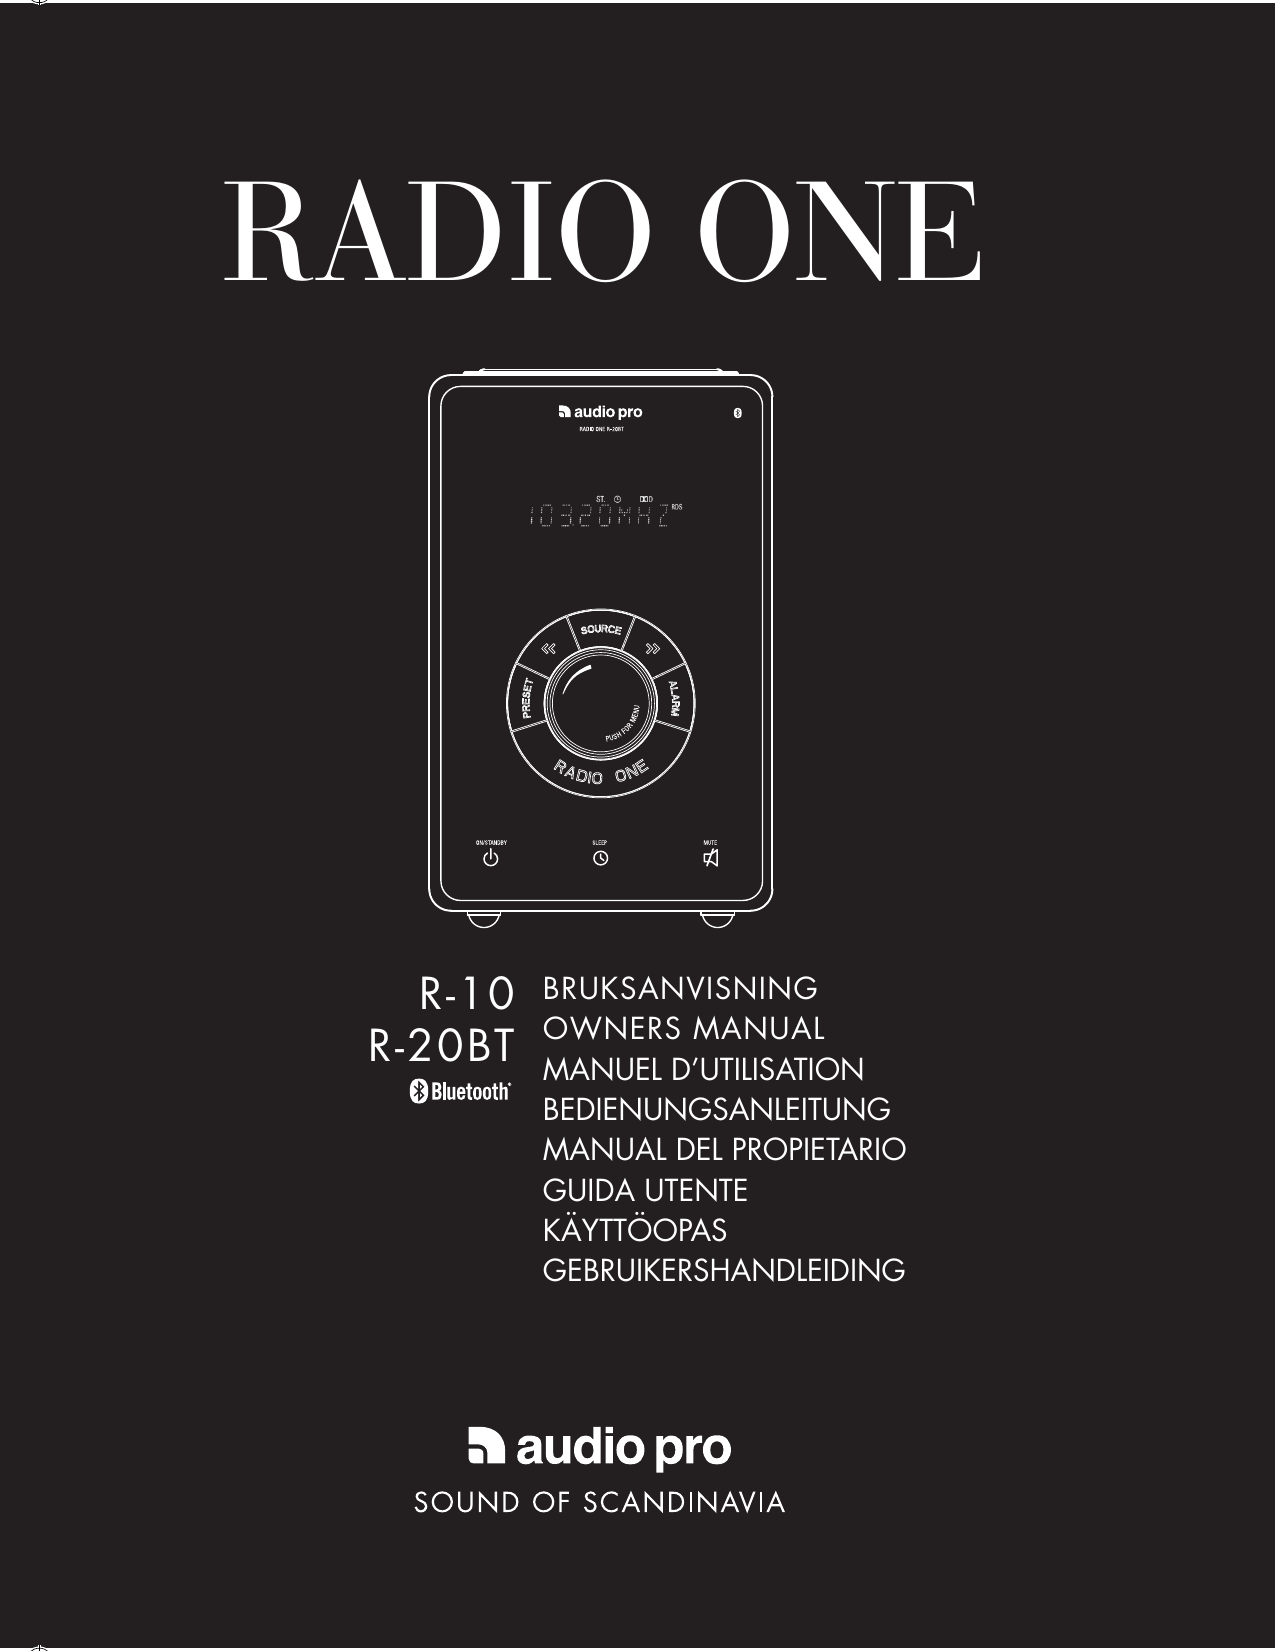 Audio Pro R-10 Radio One Owner's Manual | Manualzz